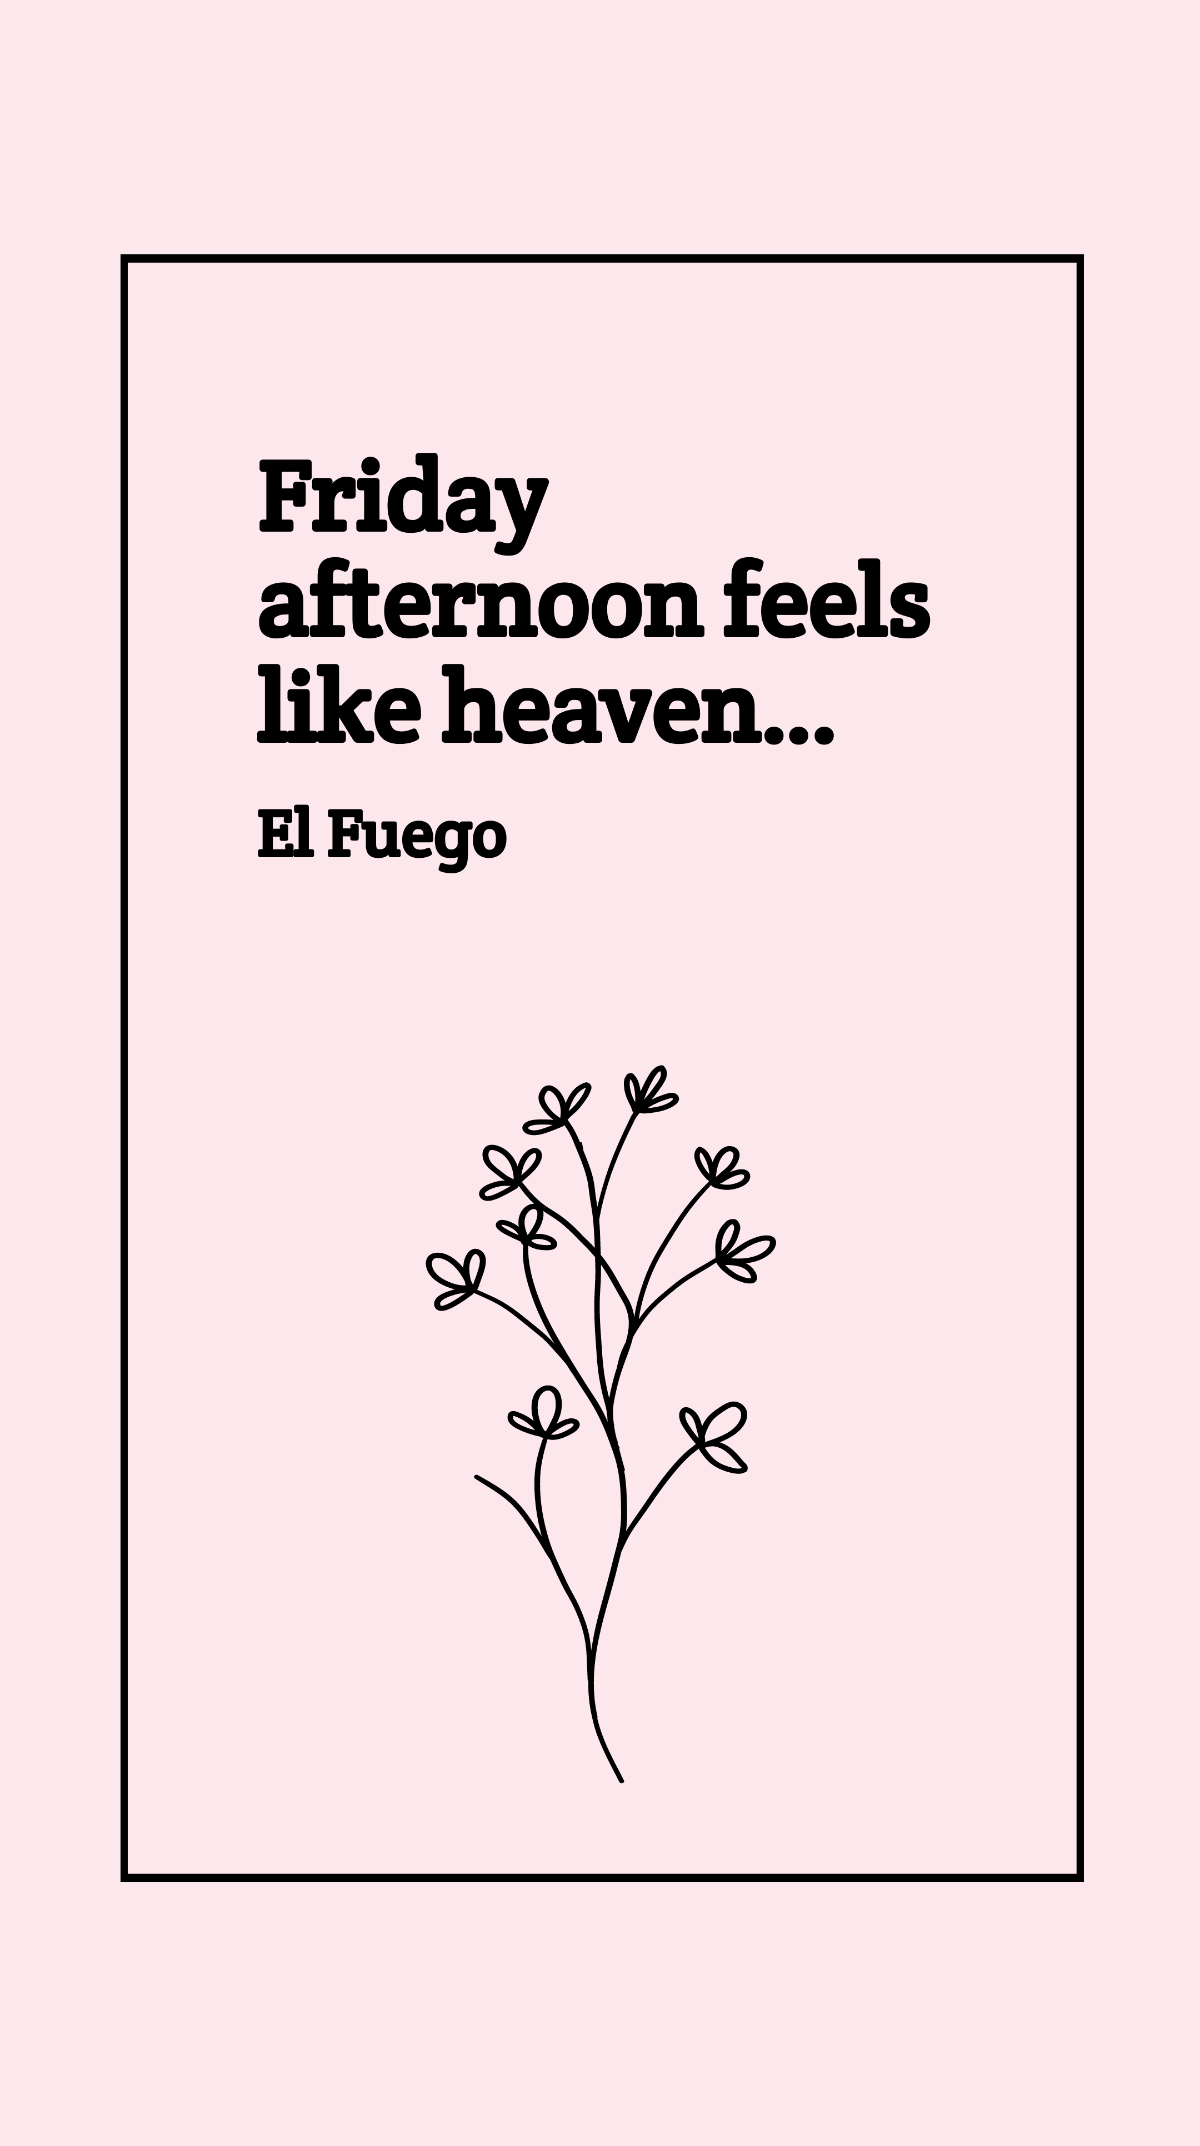 El Fuego - Friday afternoon feels like heaven… Template